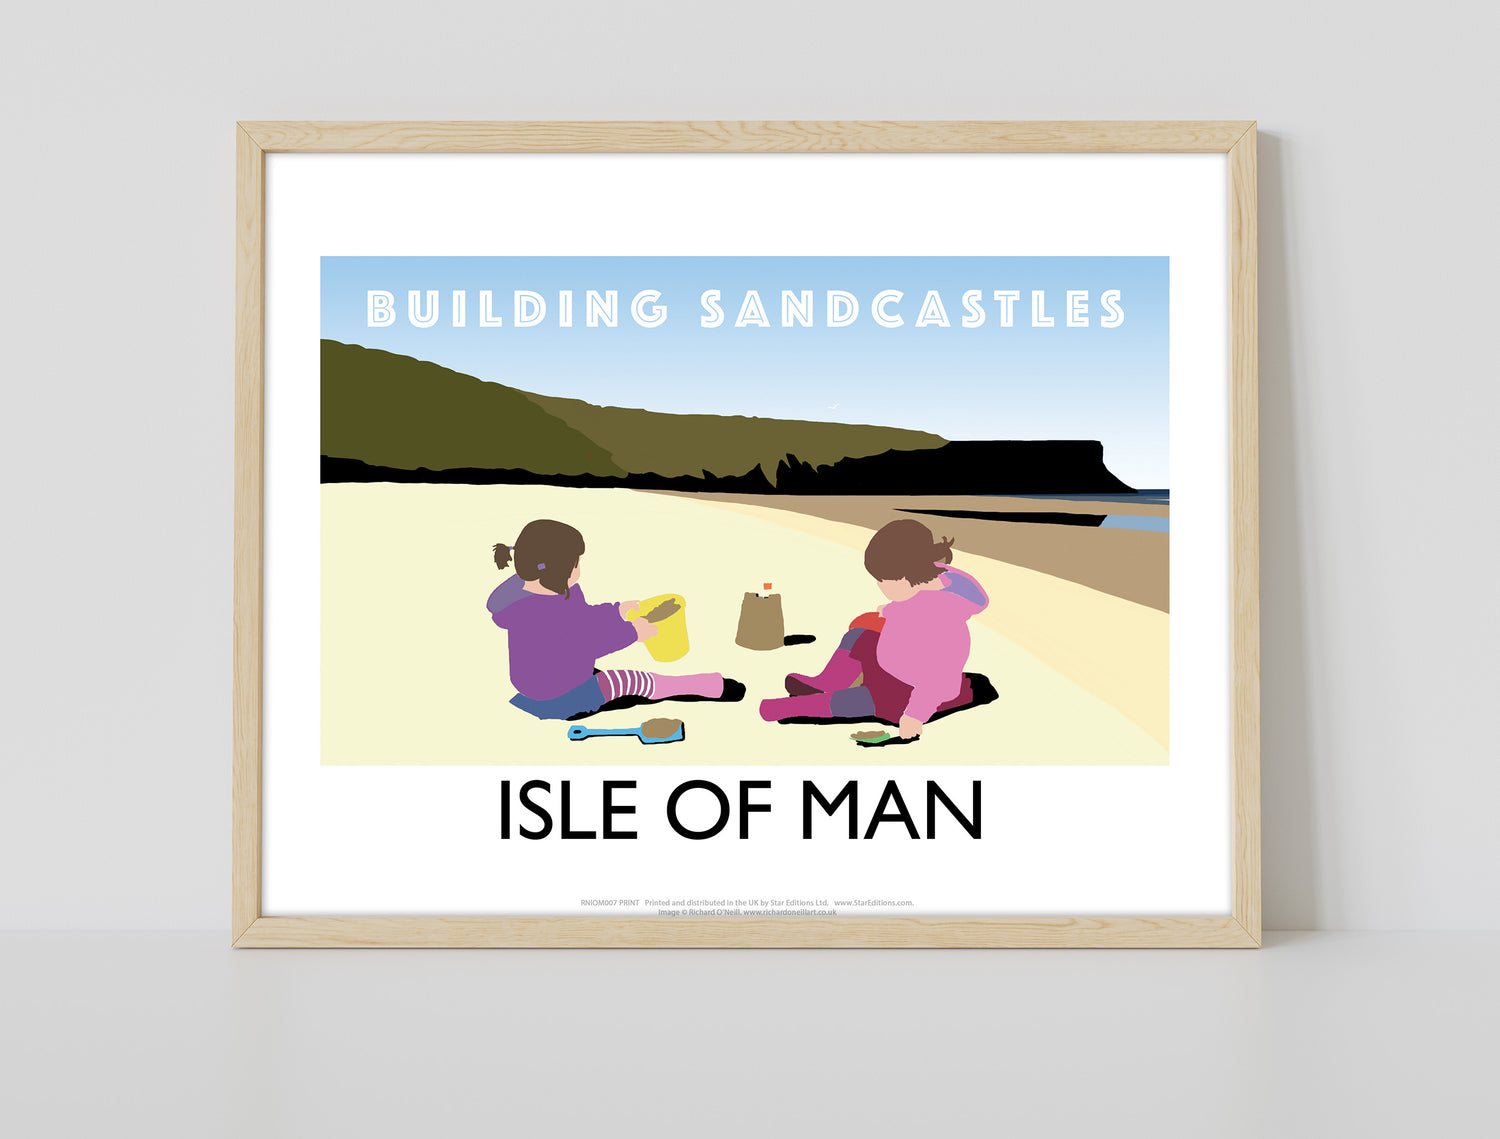 Building Sandcastles, Isle of Man - Art Print